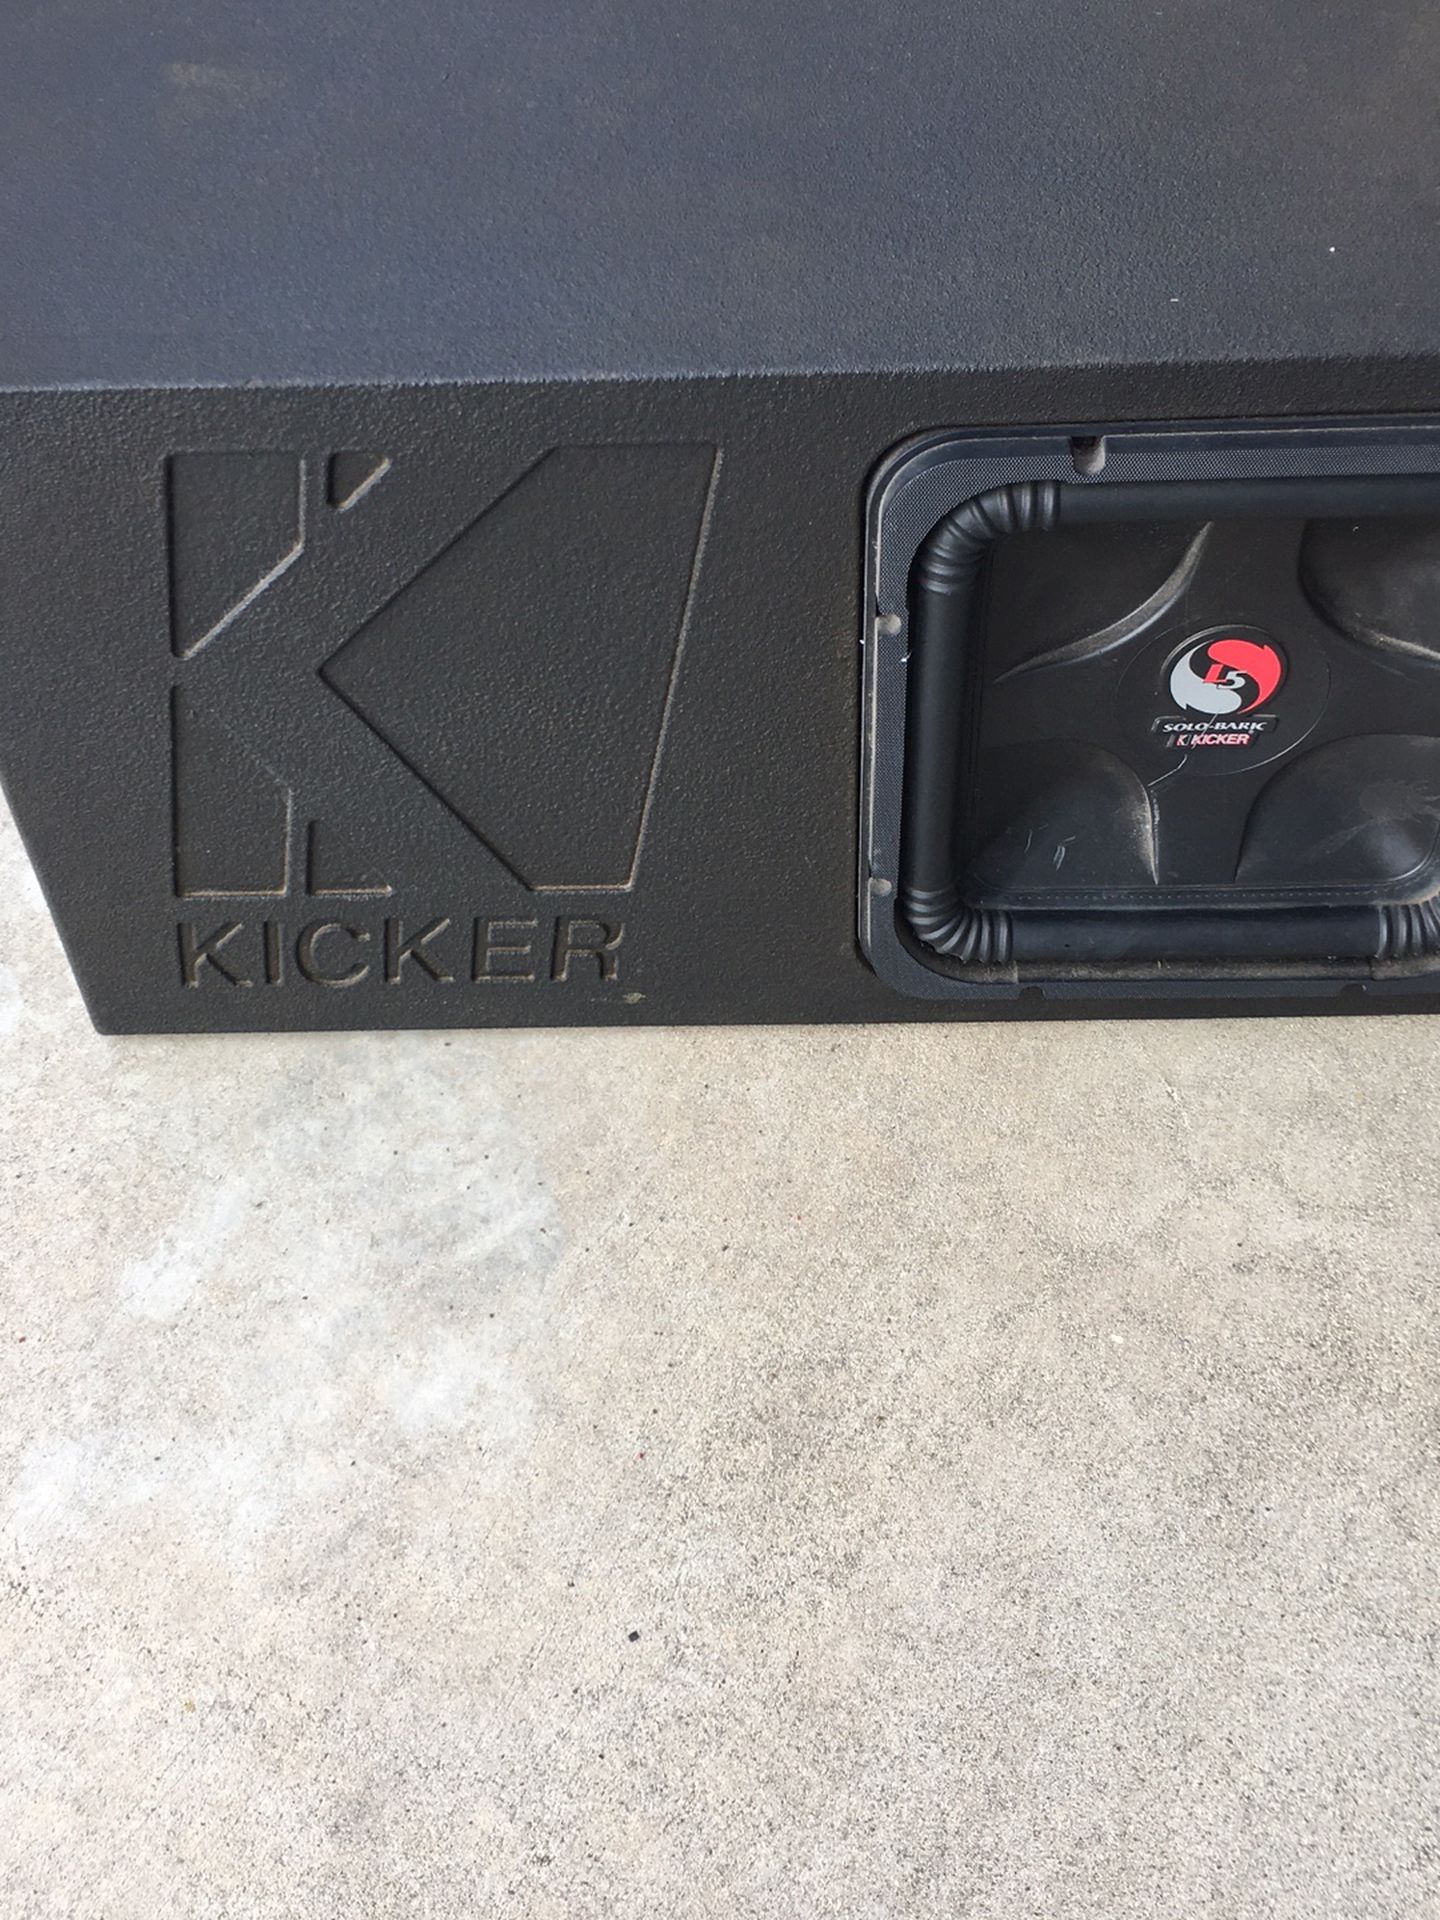 Solo Baric Kicker Woofer In Kicker Boom Box